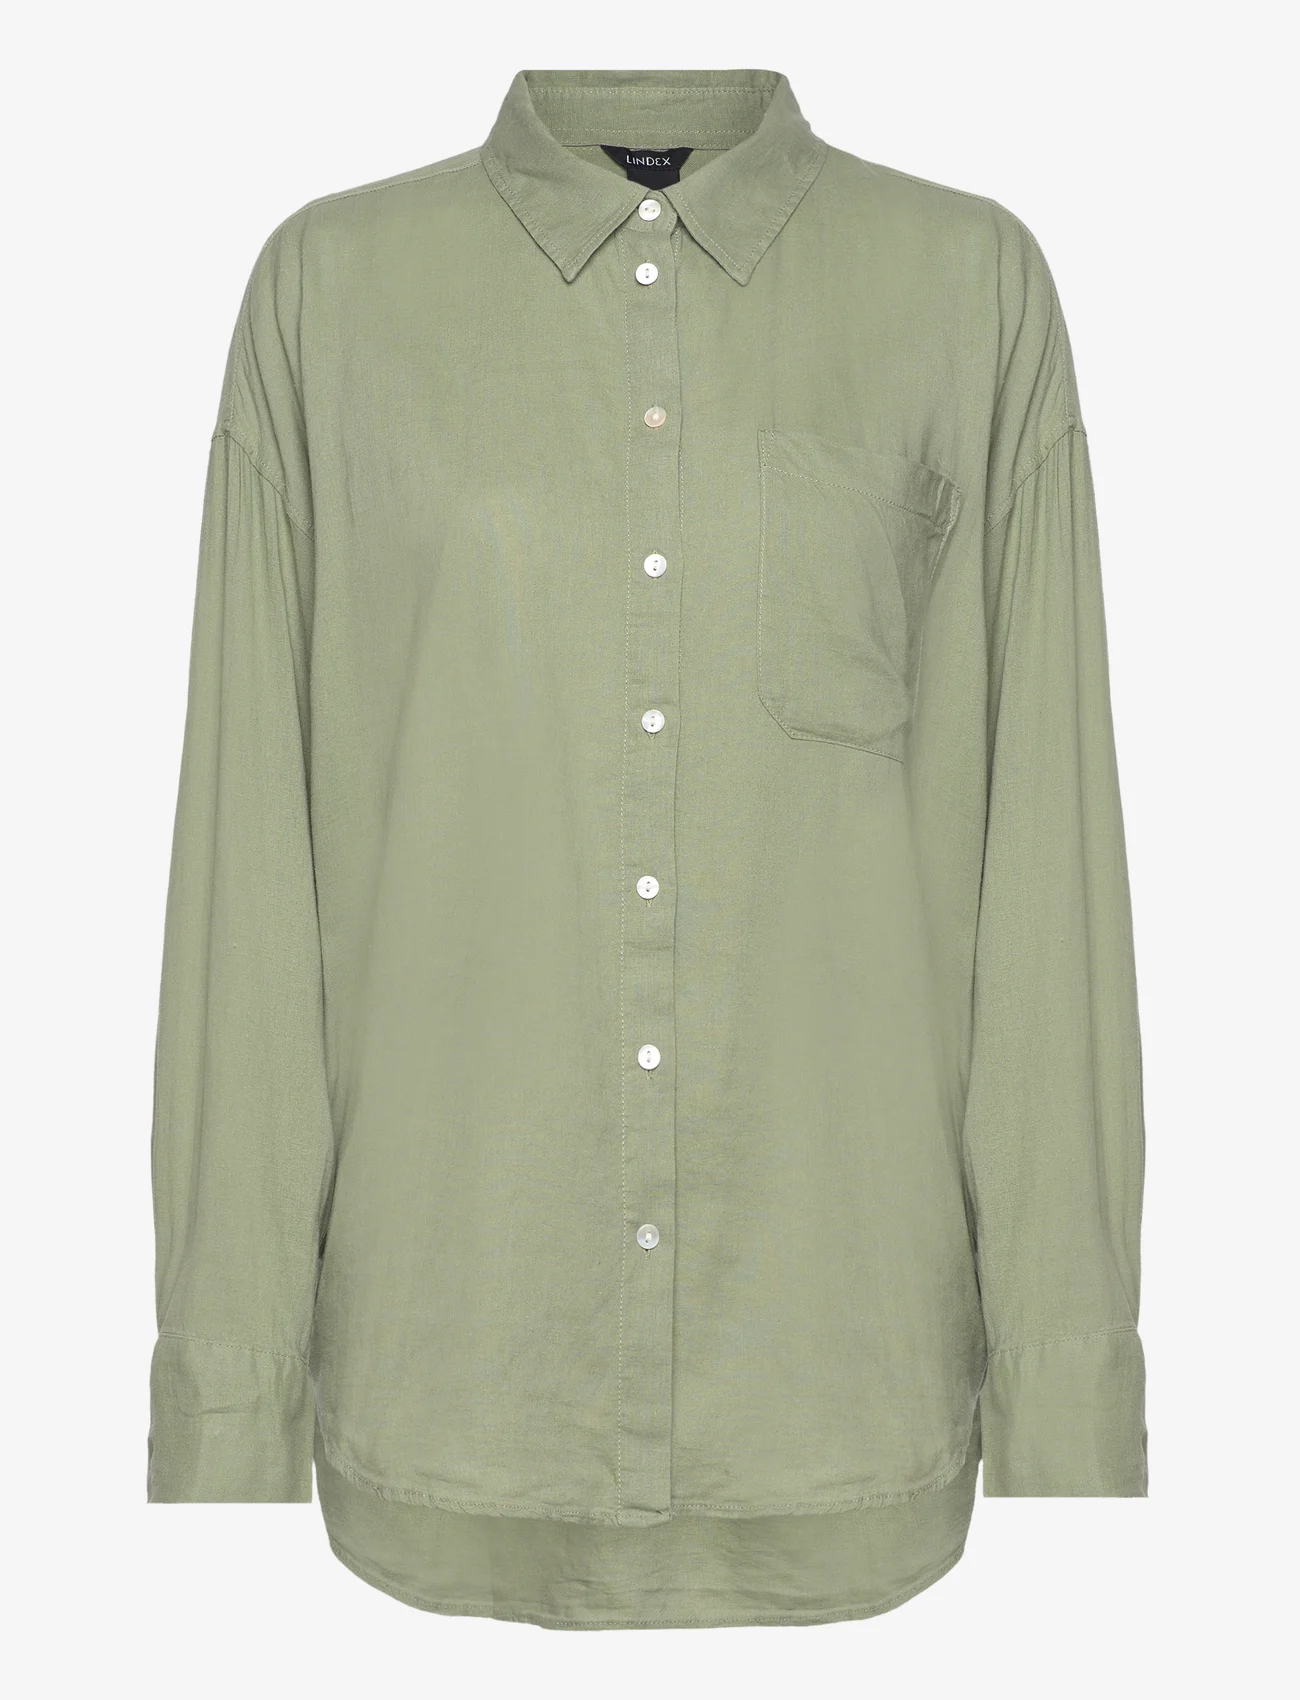 Lindex - Shirt Magda Linen blend - linskjorter - dusty green - 0